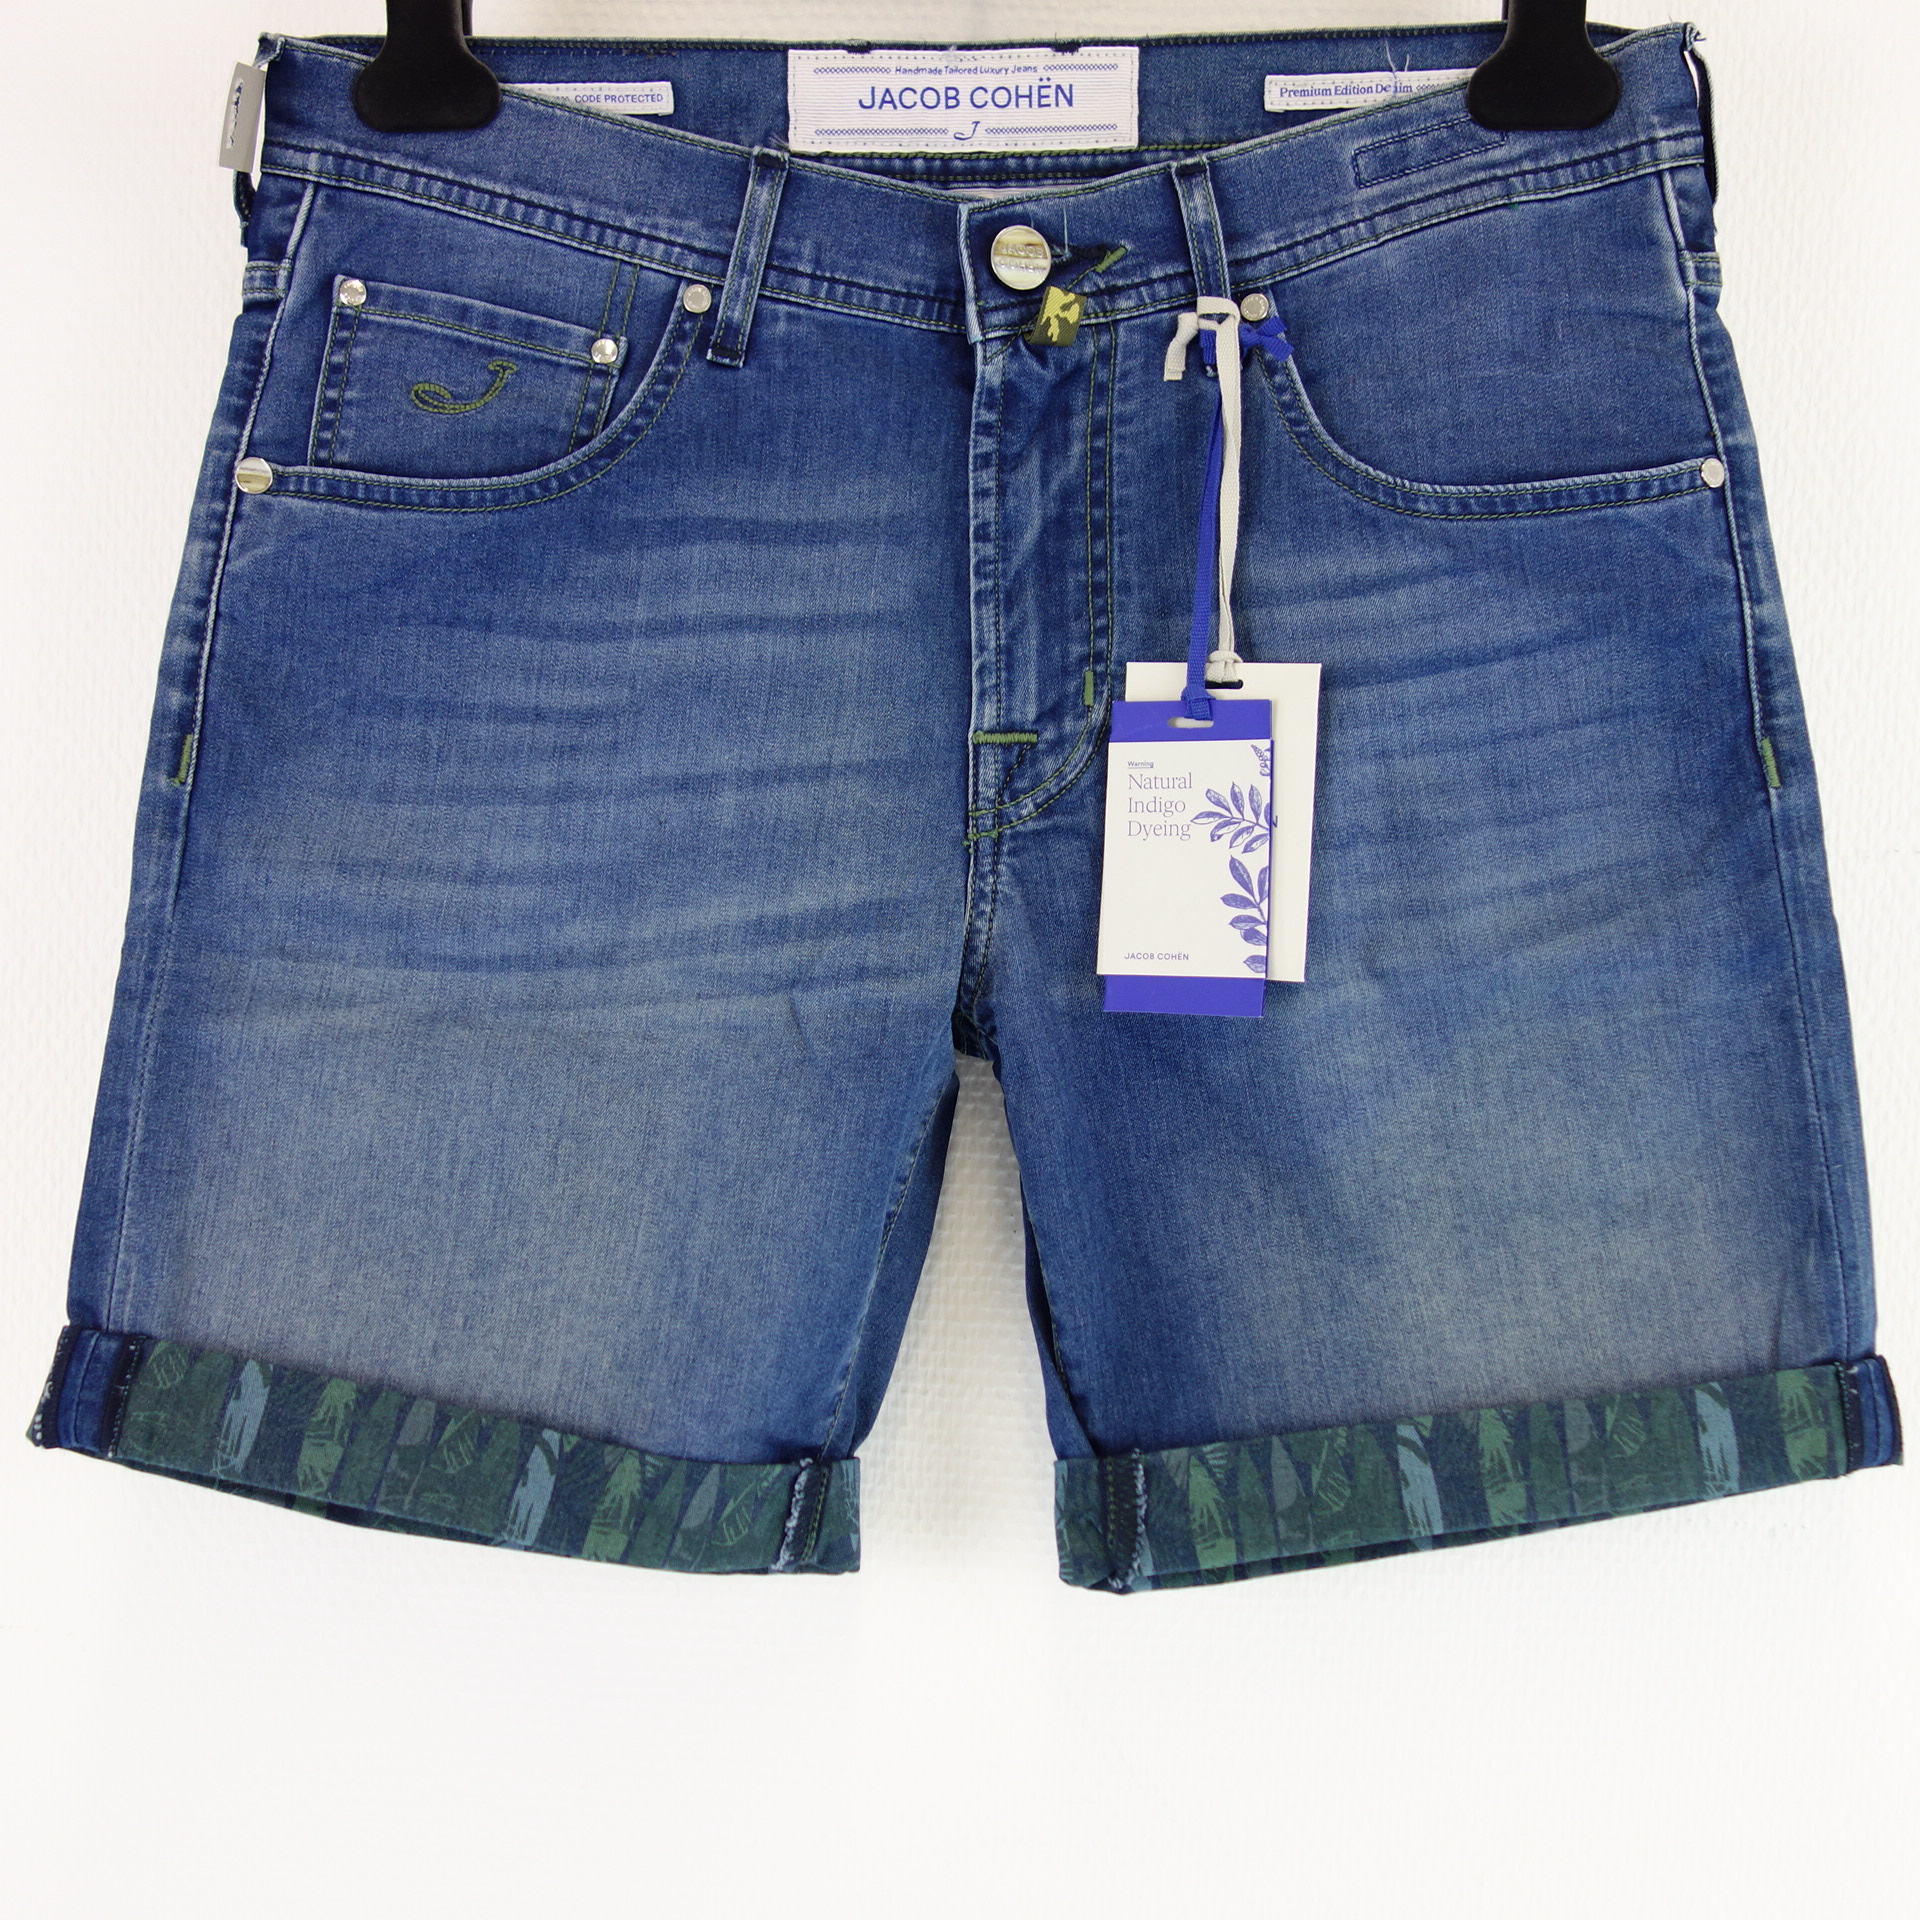 JACOB COHEN Kurze Herren Sommer Hose Jeans Jeansshorts Shorts Bermuda Fell Label Tuch